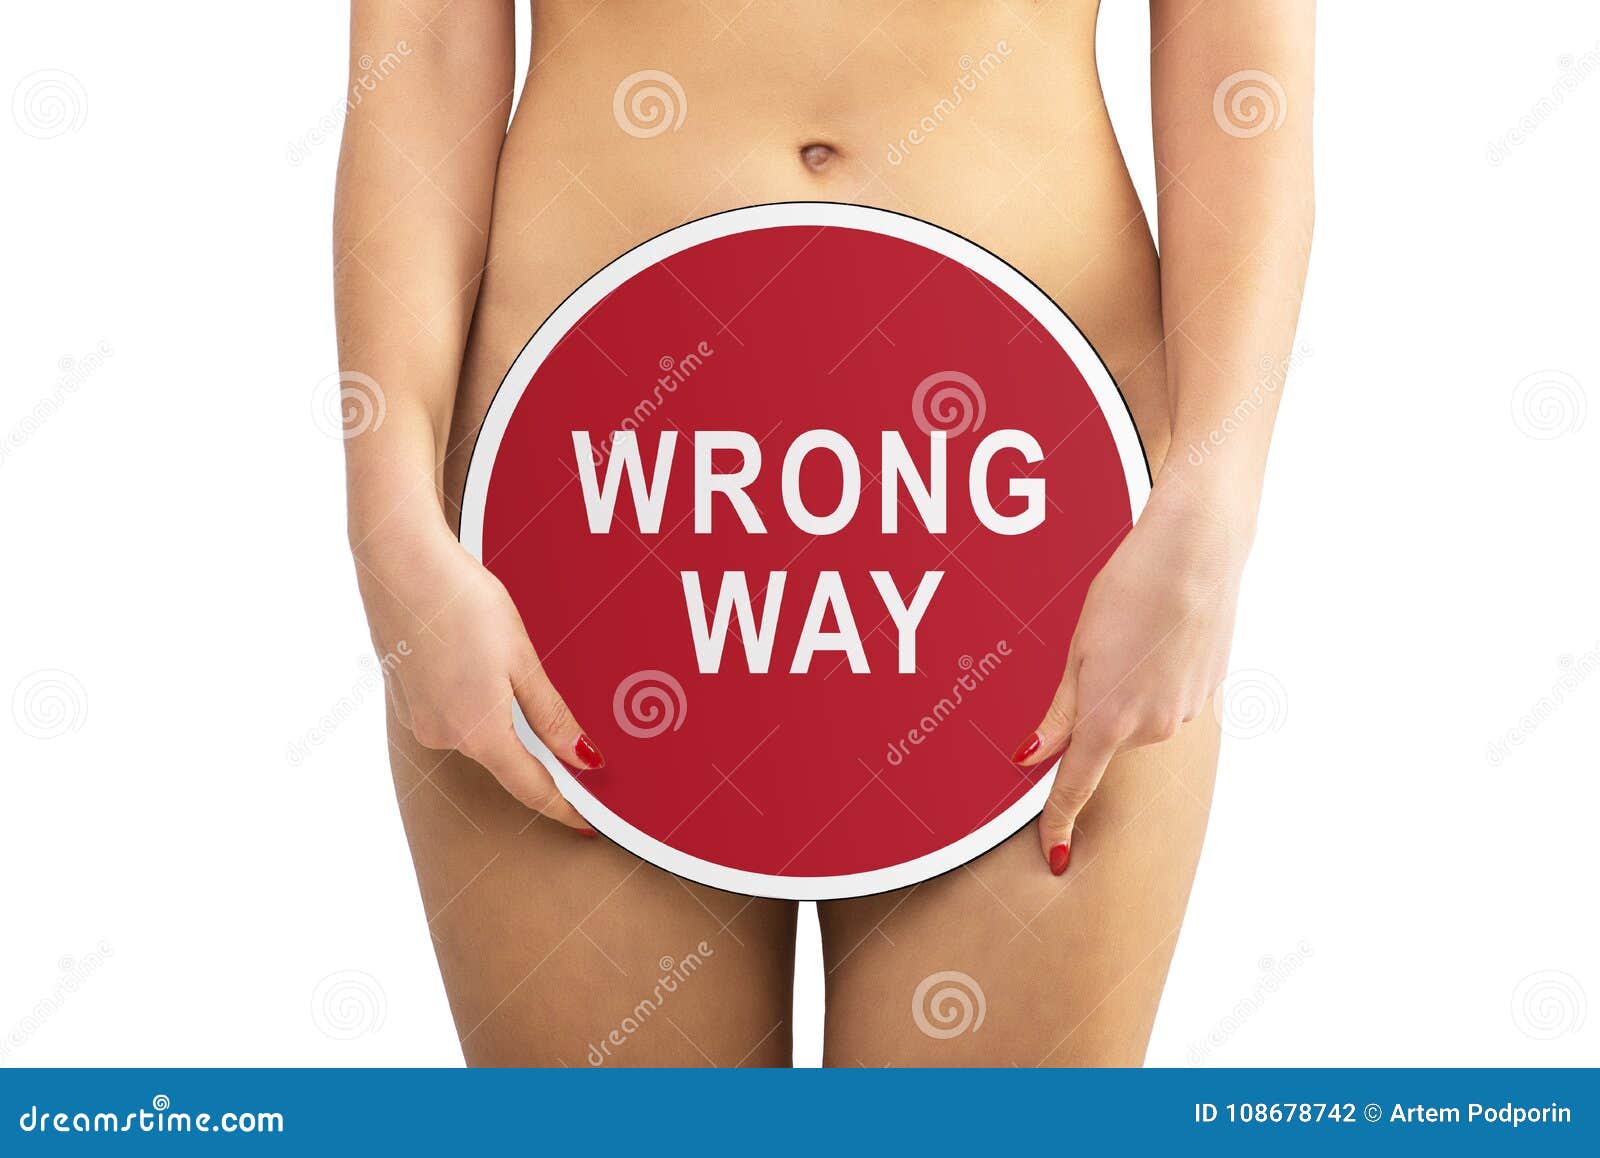 Wrong way sex stock photo